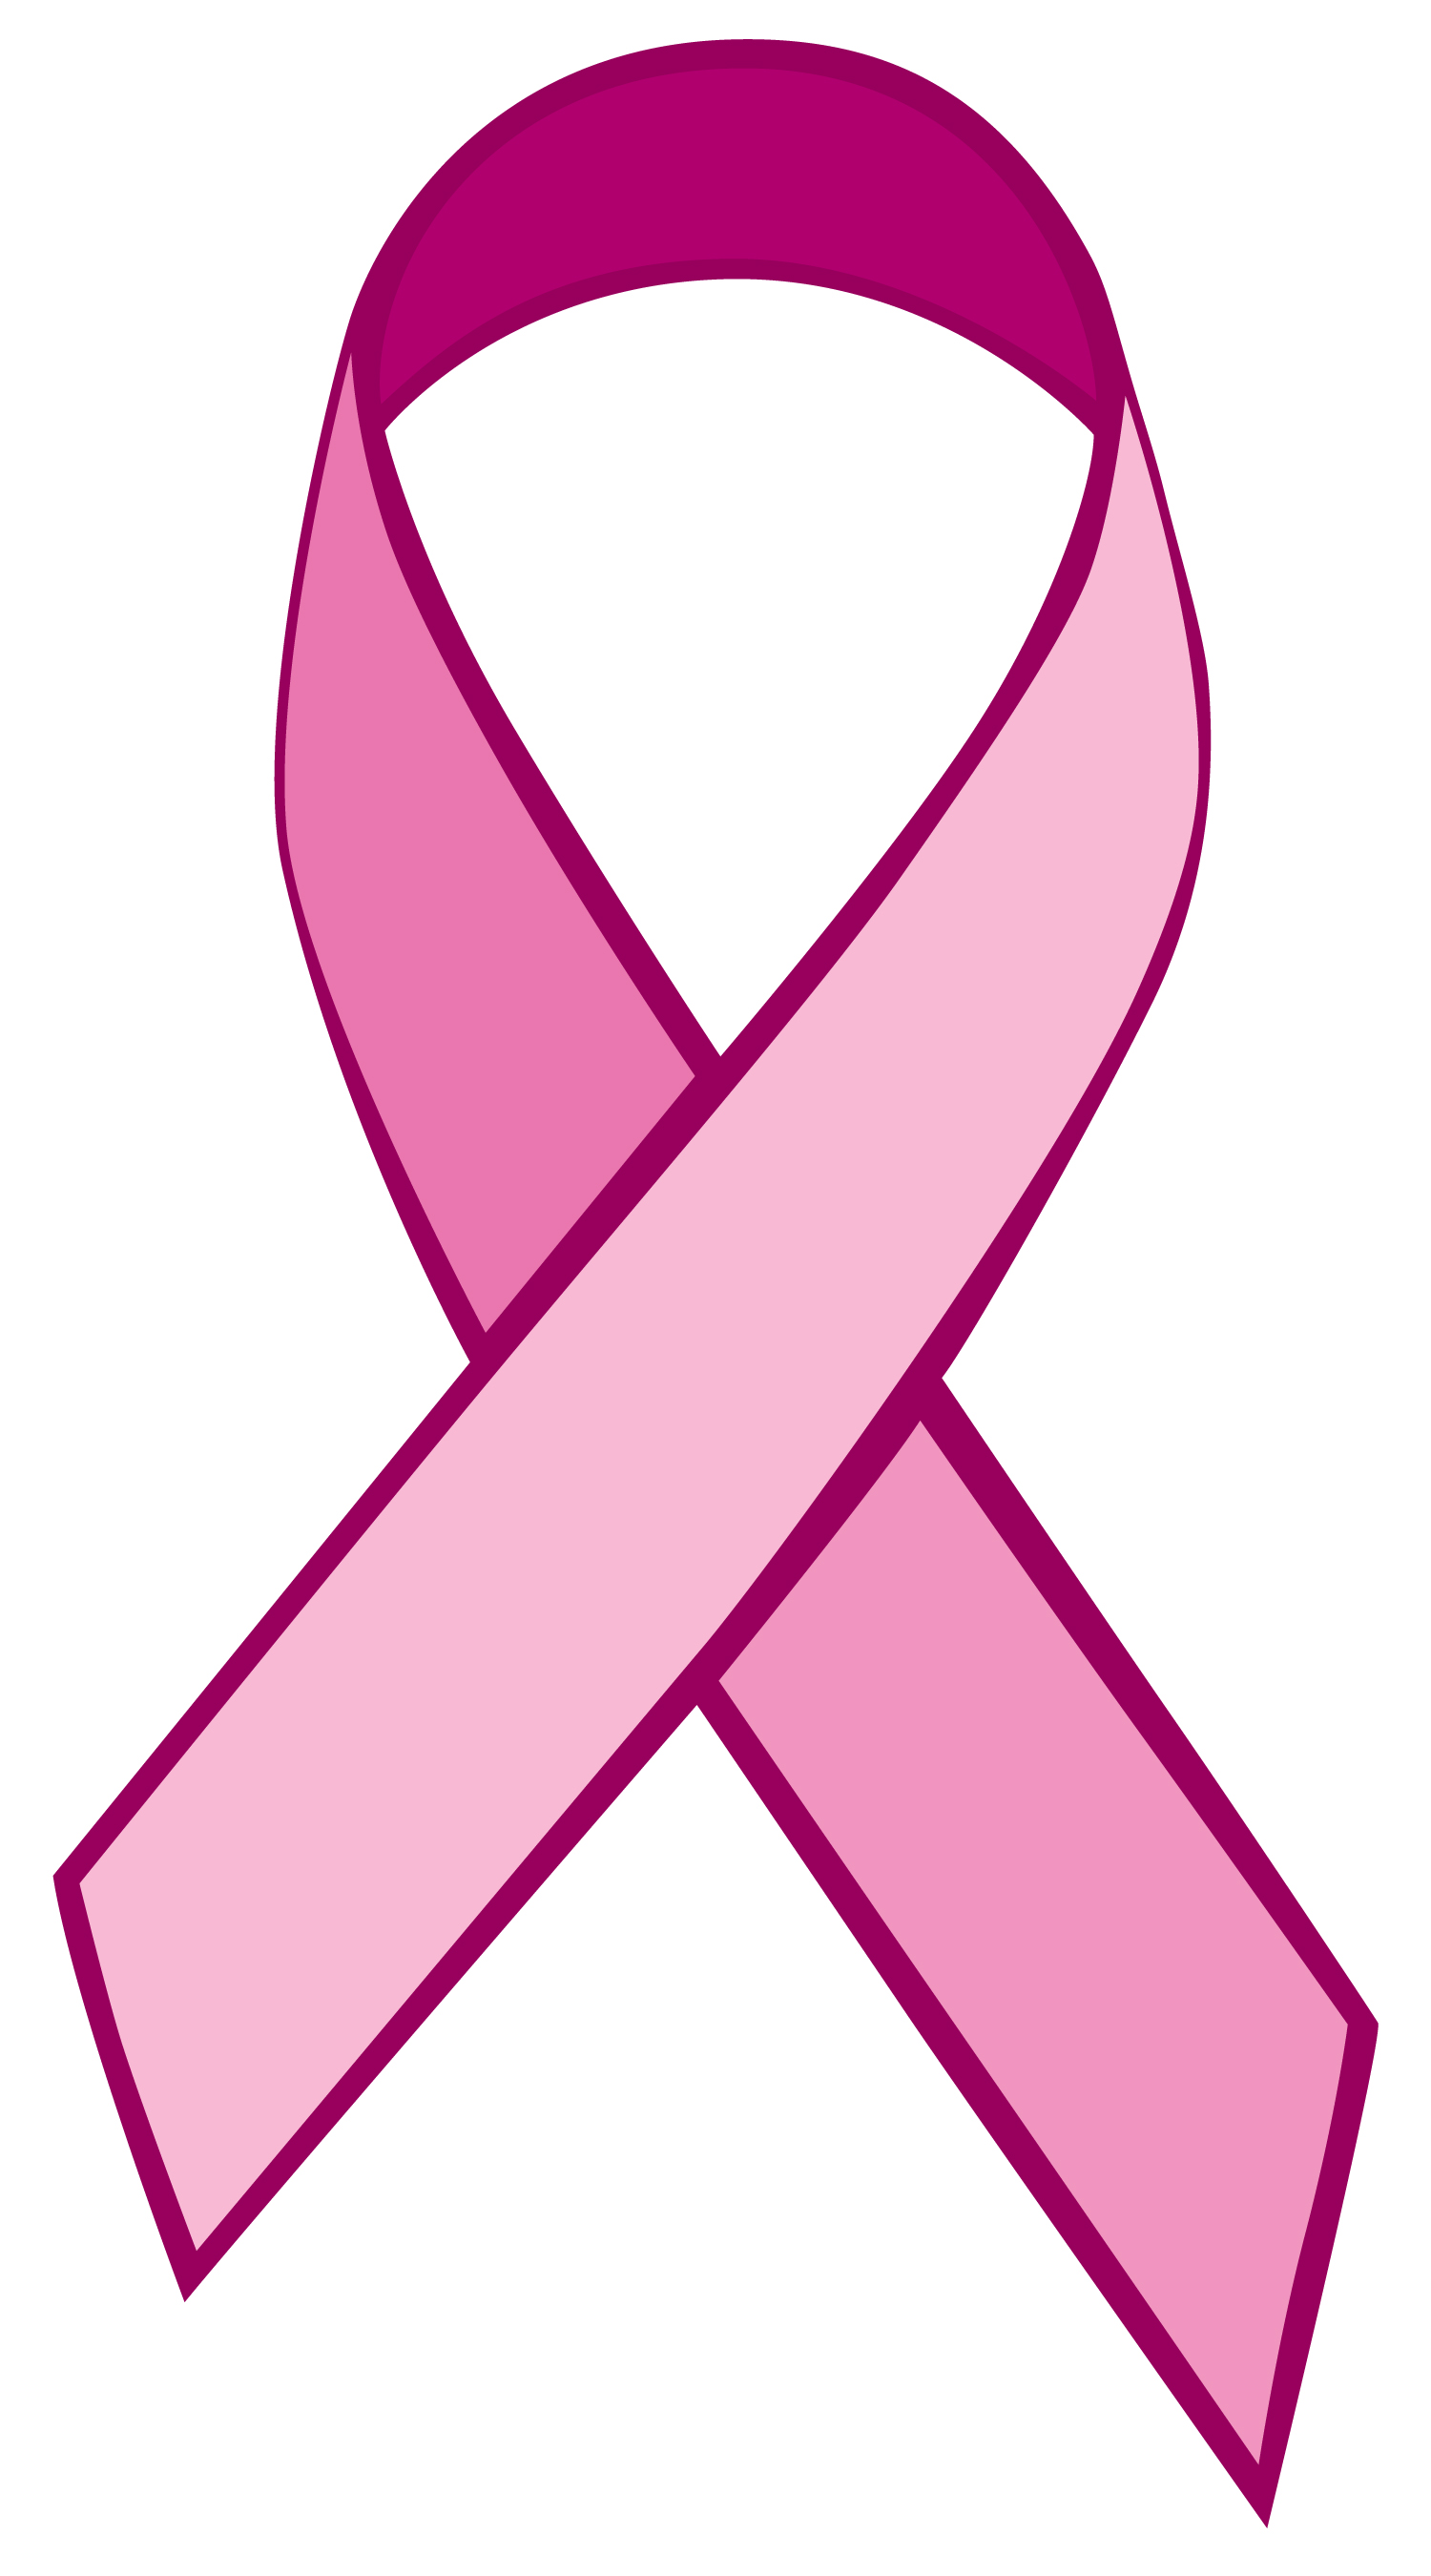  - Free Breast Cancer Ribbon Clip Art